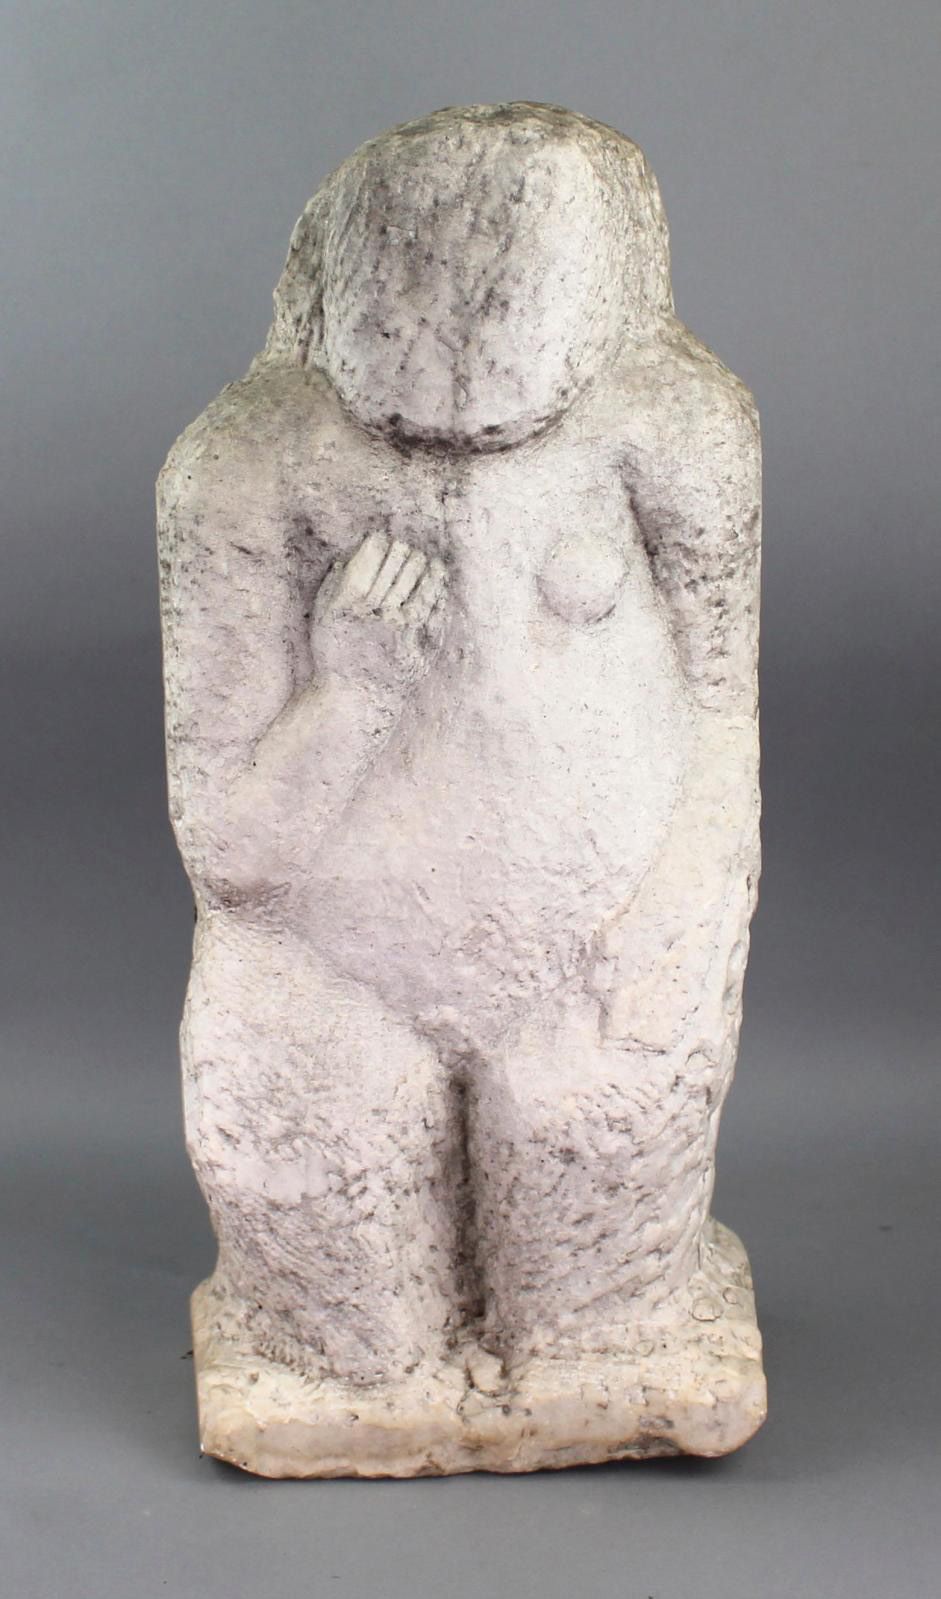 Ossip Zadkine (1890–1967), Statuette de jeune femme (Statuette of a Young Woman), carved stone, overall size 51 x 23 x 14 cm/20.08 x 9.05 